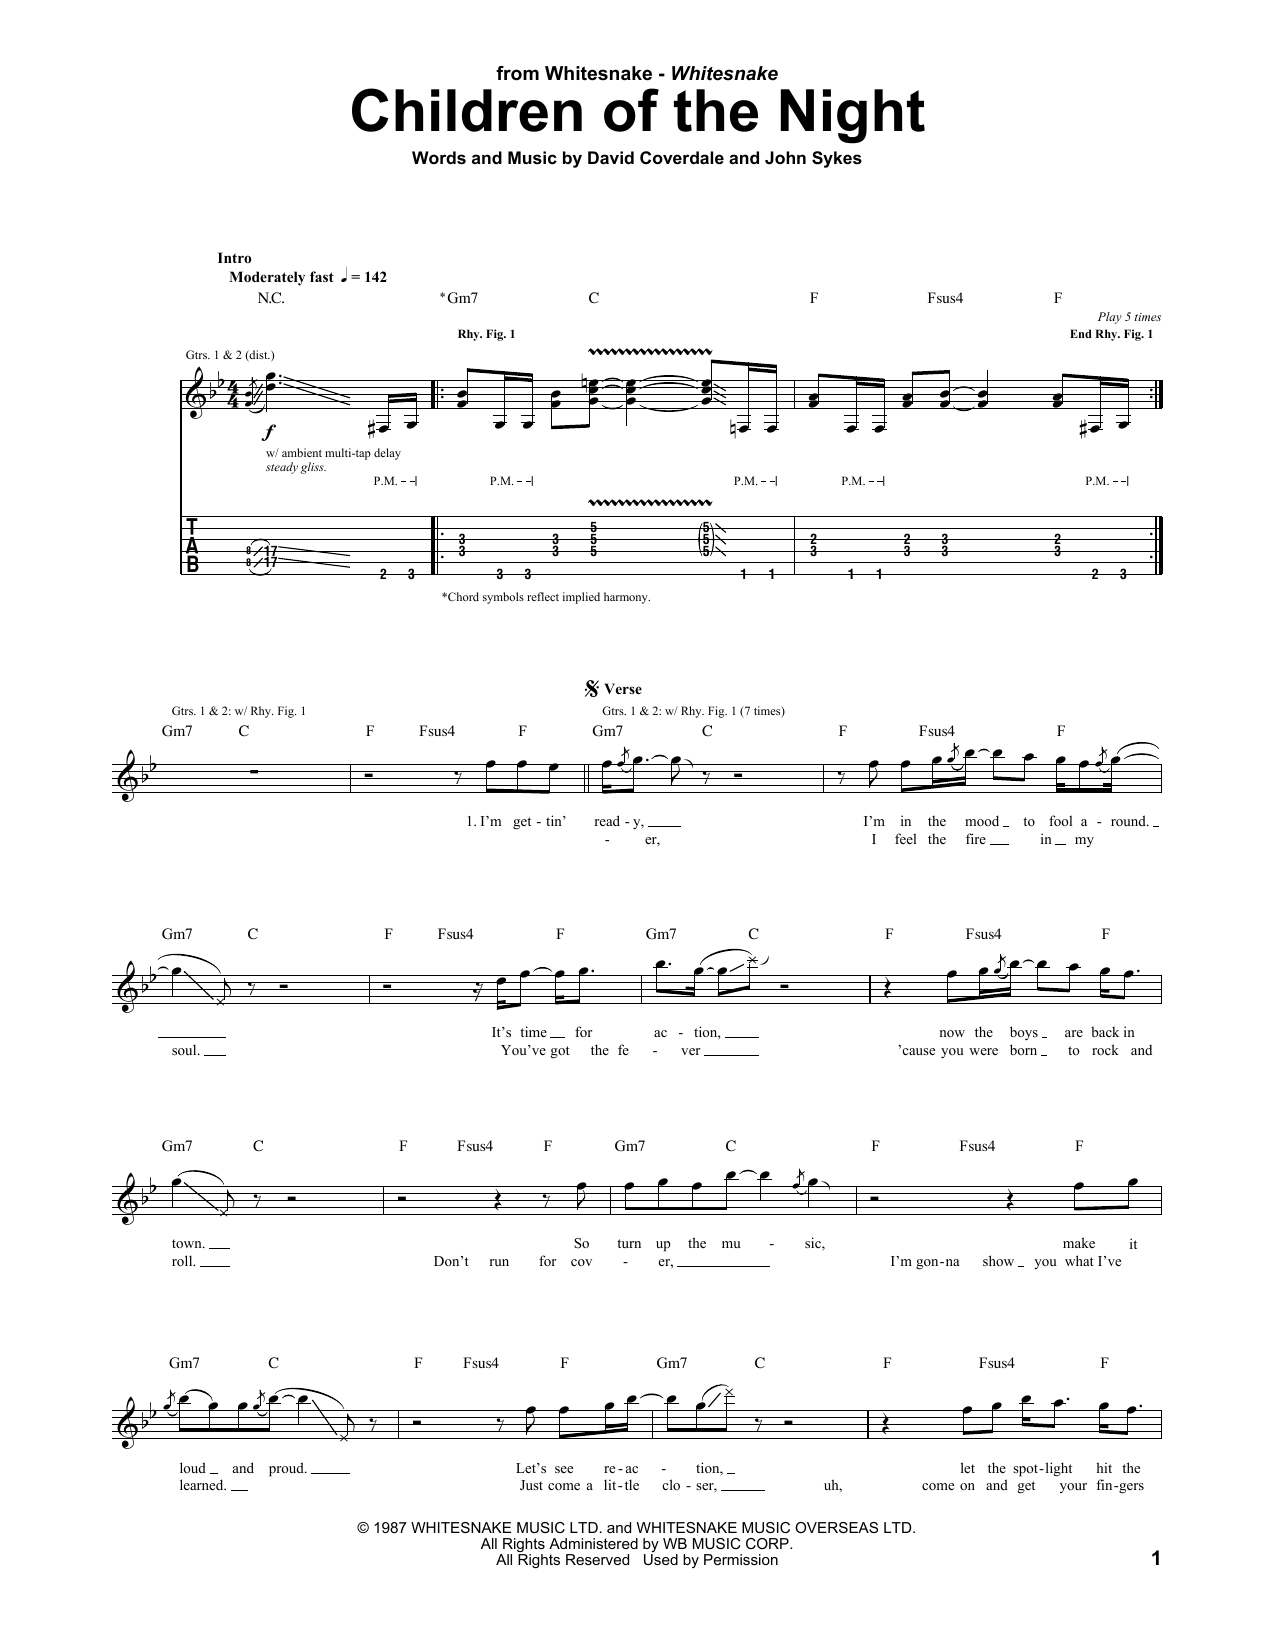 Whitesnake Children Of The Night Sheet Music Notes & Chords for Guitar Tab - Download or Print PDF